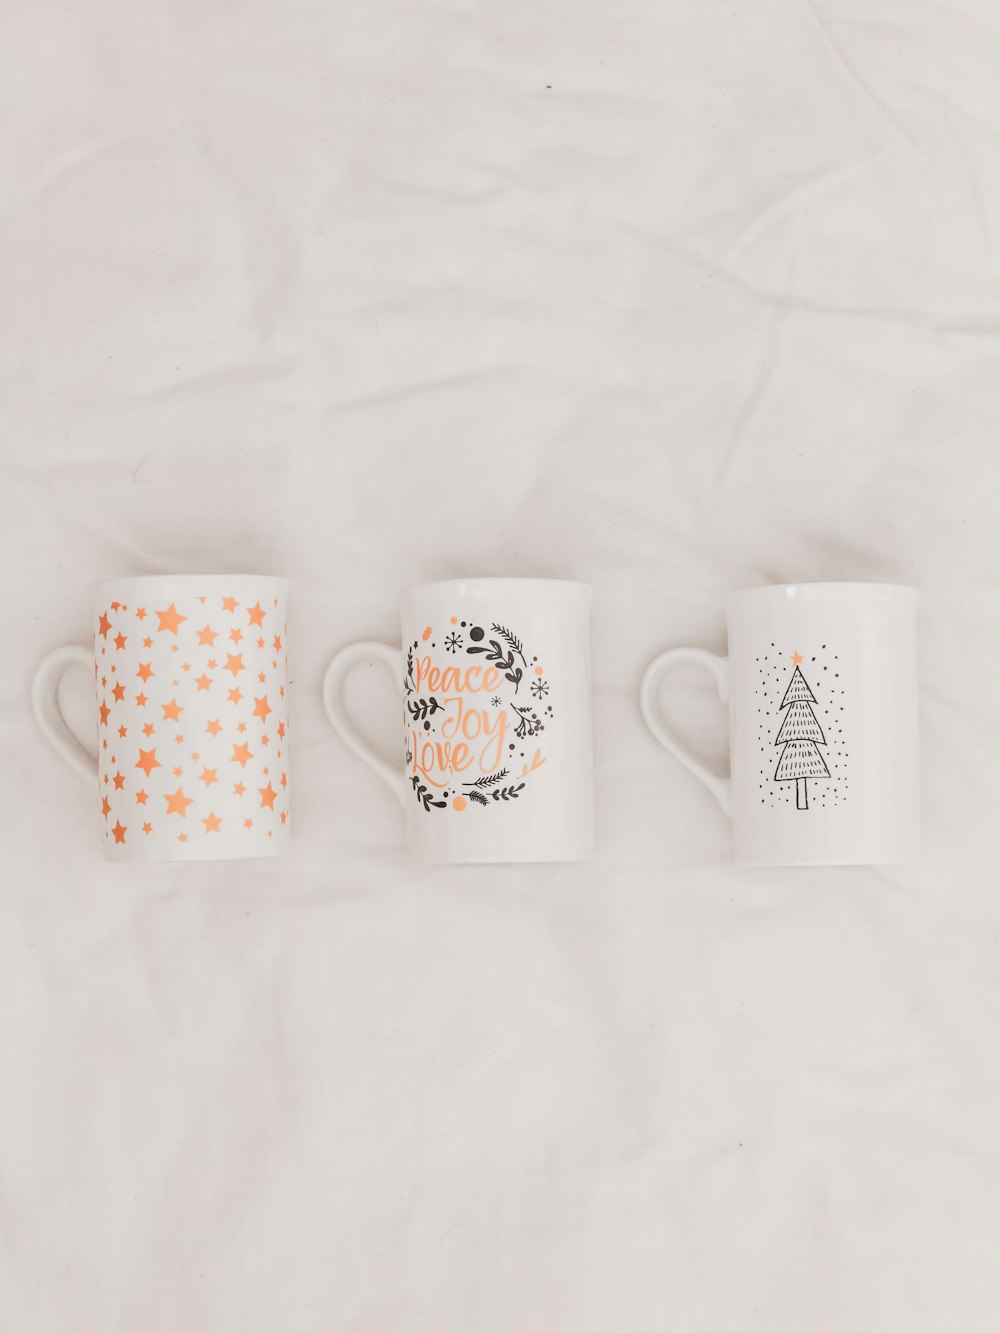 three white-and-multicolored ceramic mugs on white textile